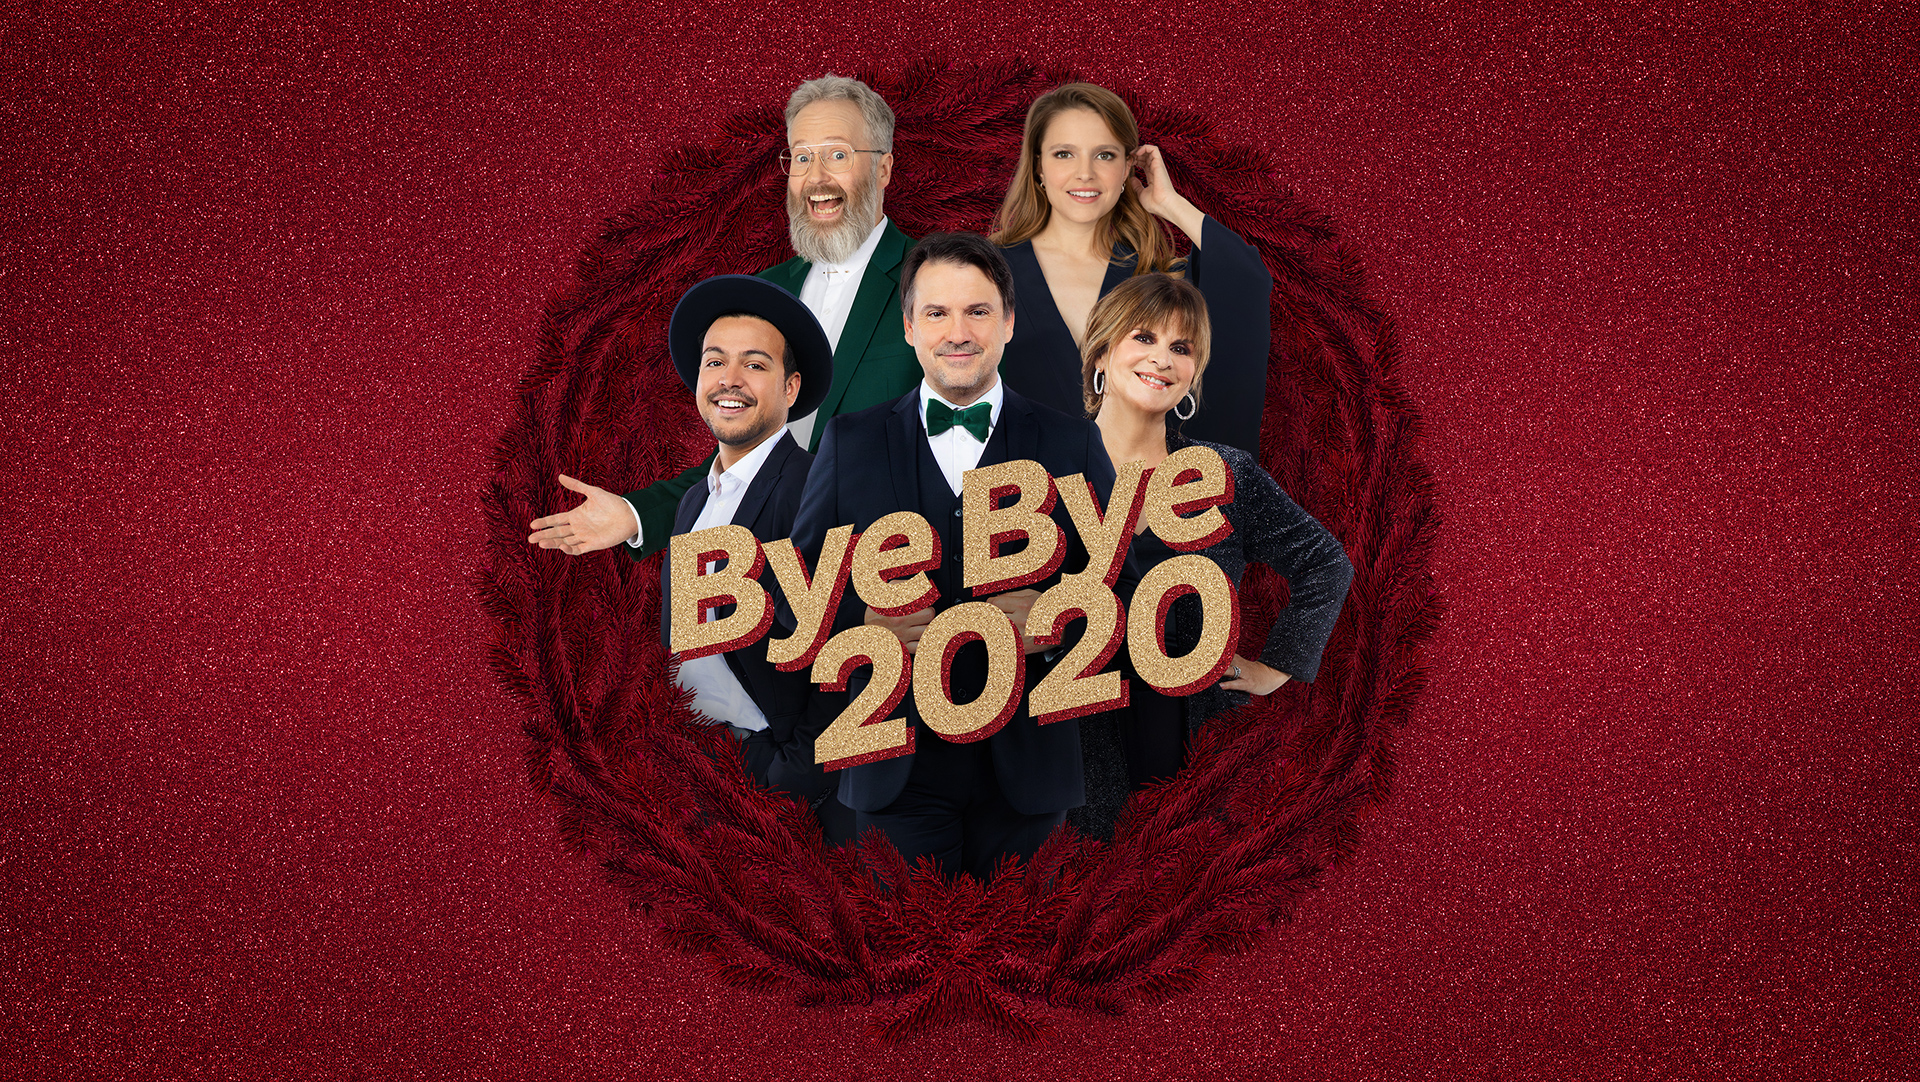 Bye Bye 2020